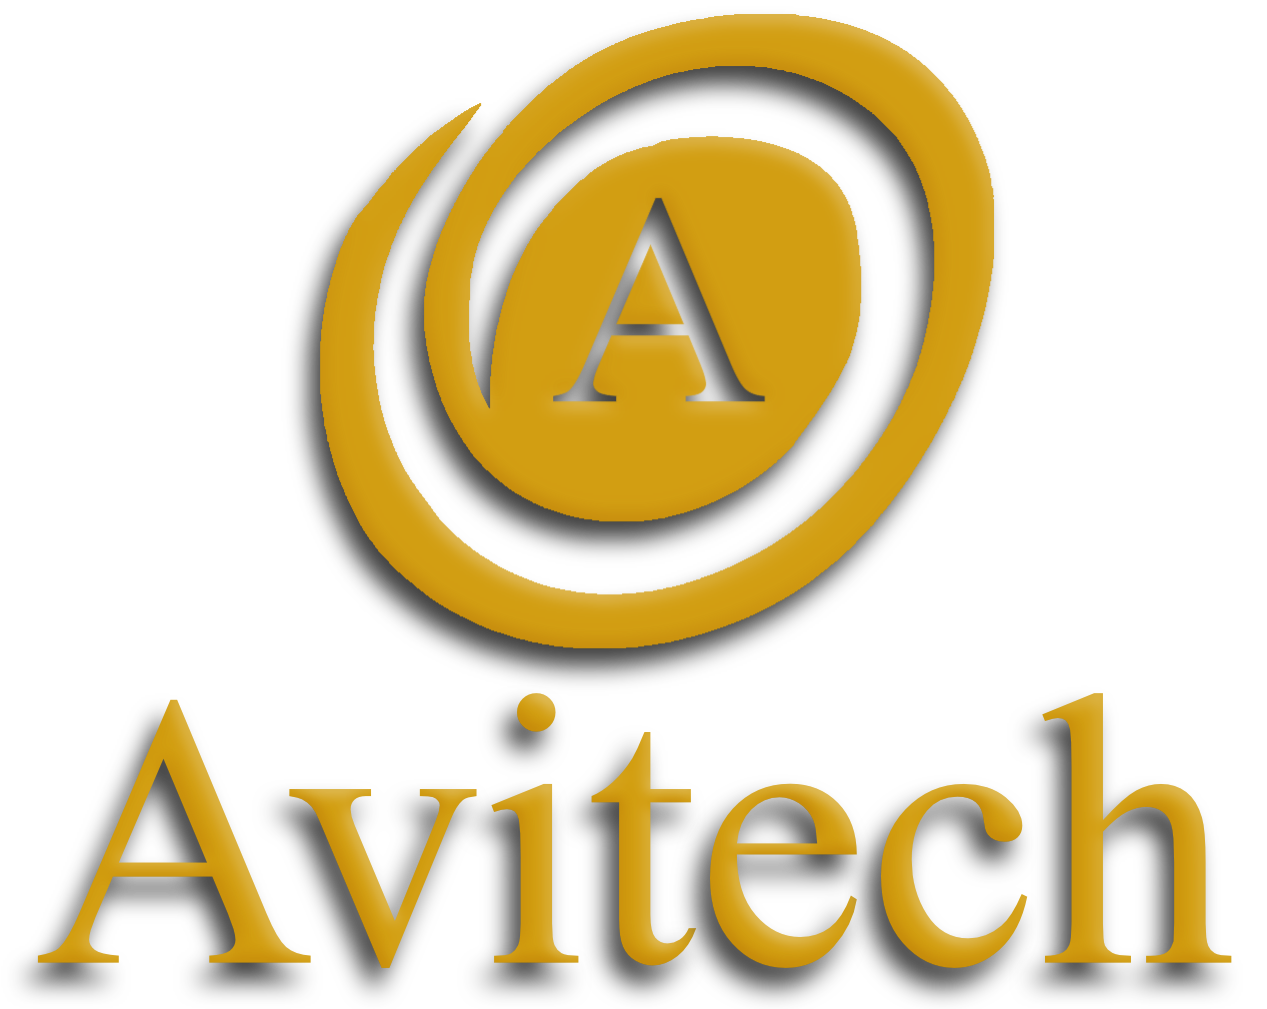 AViTech